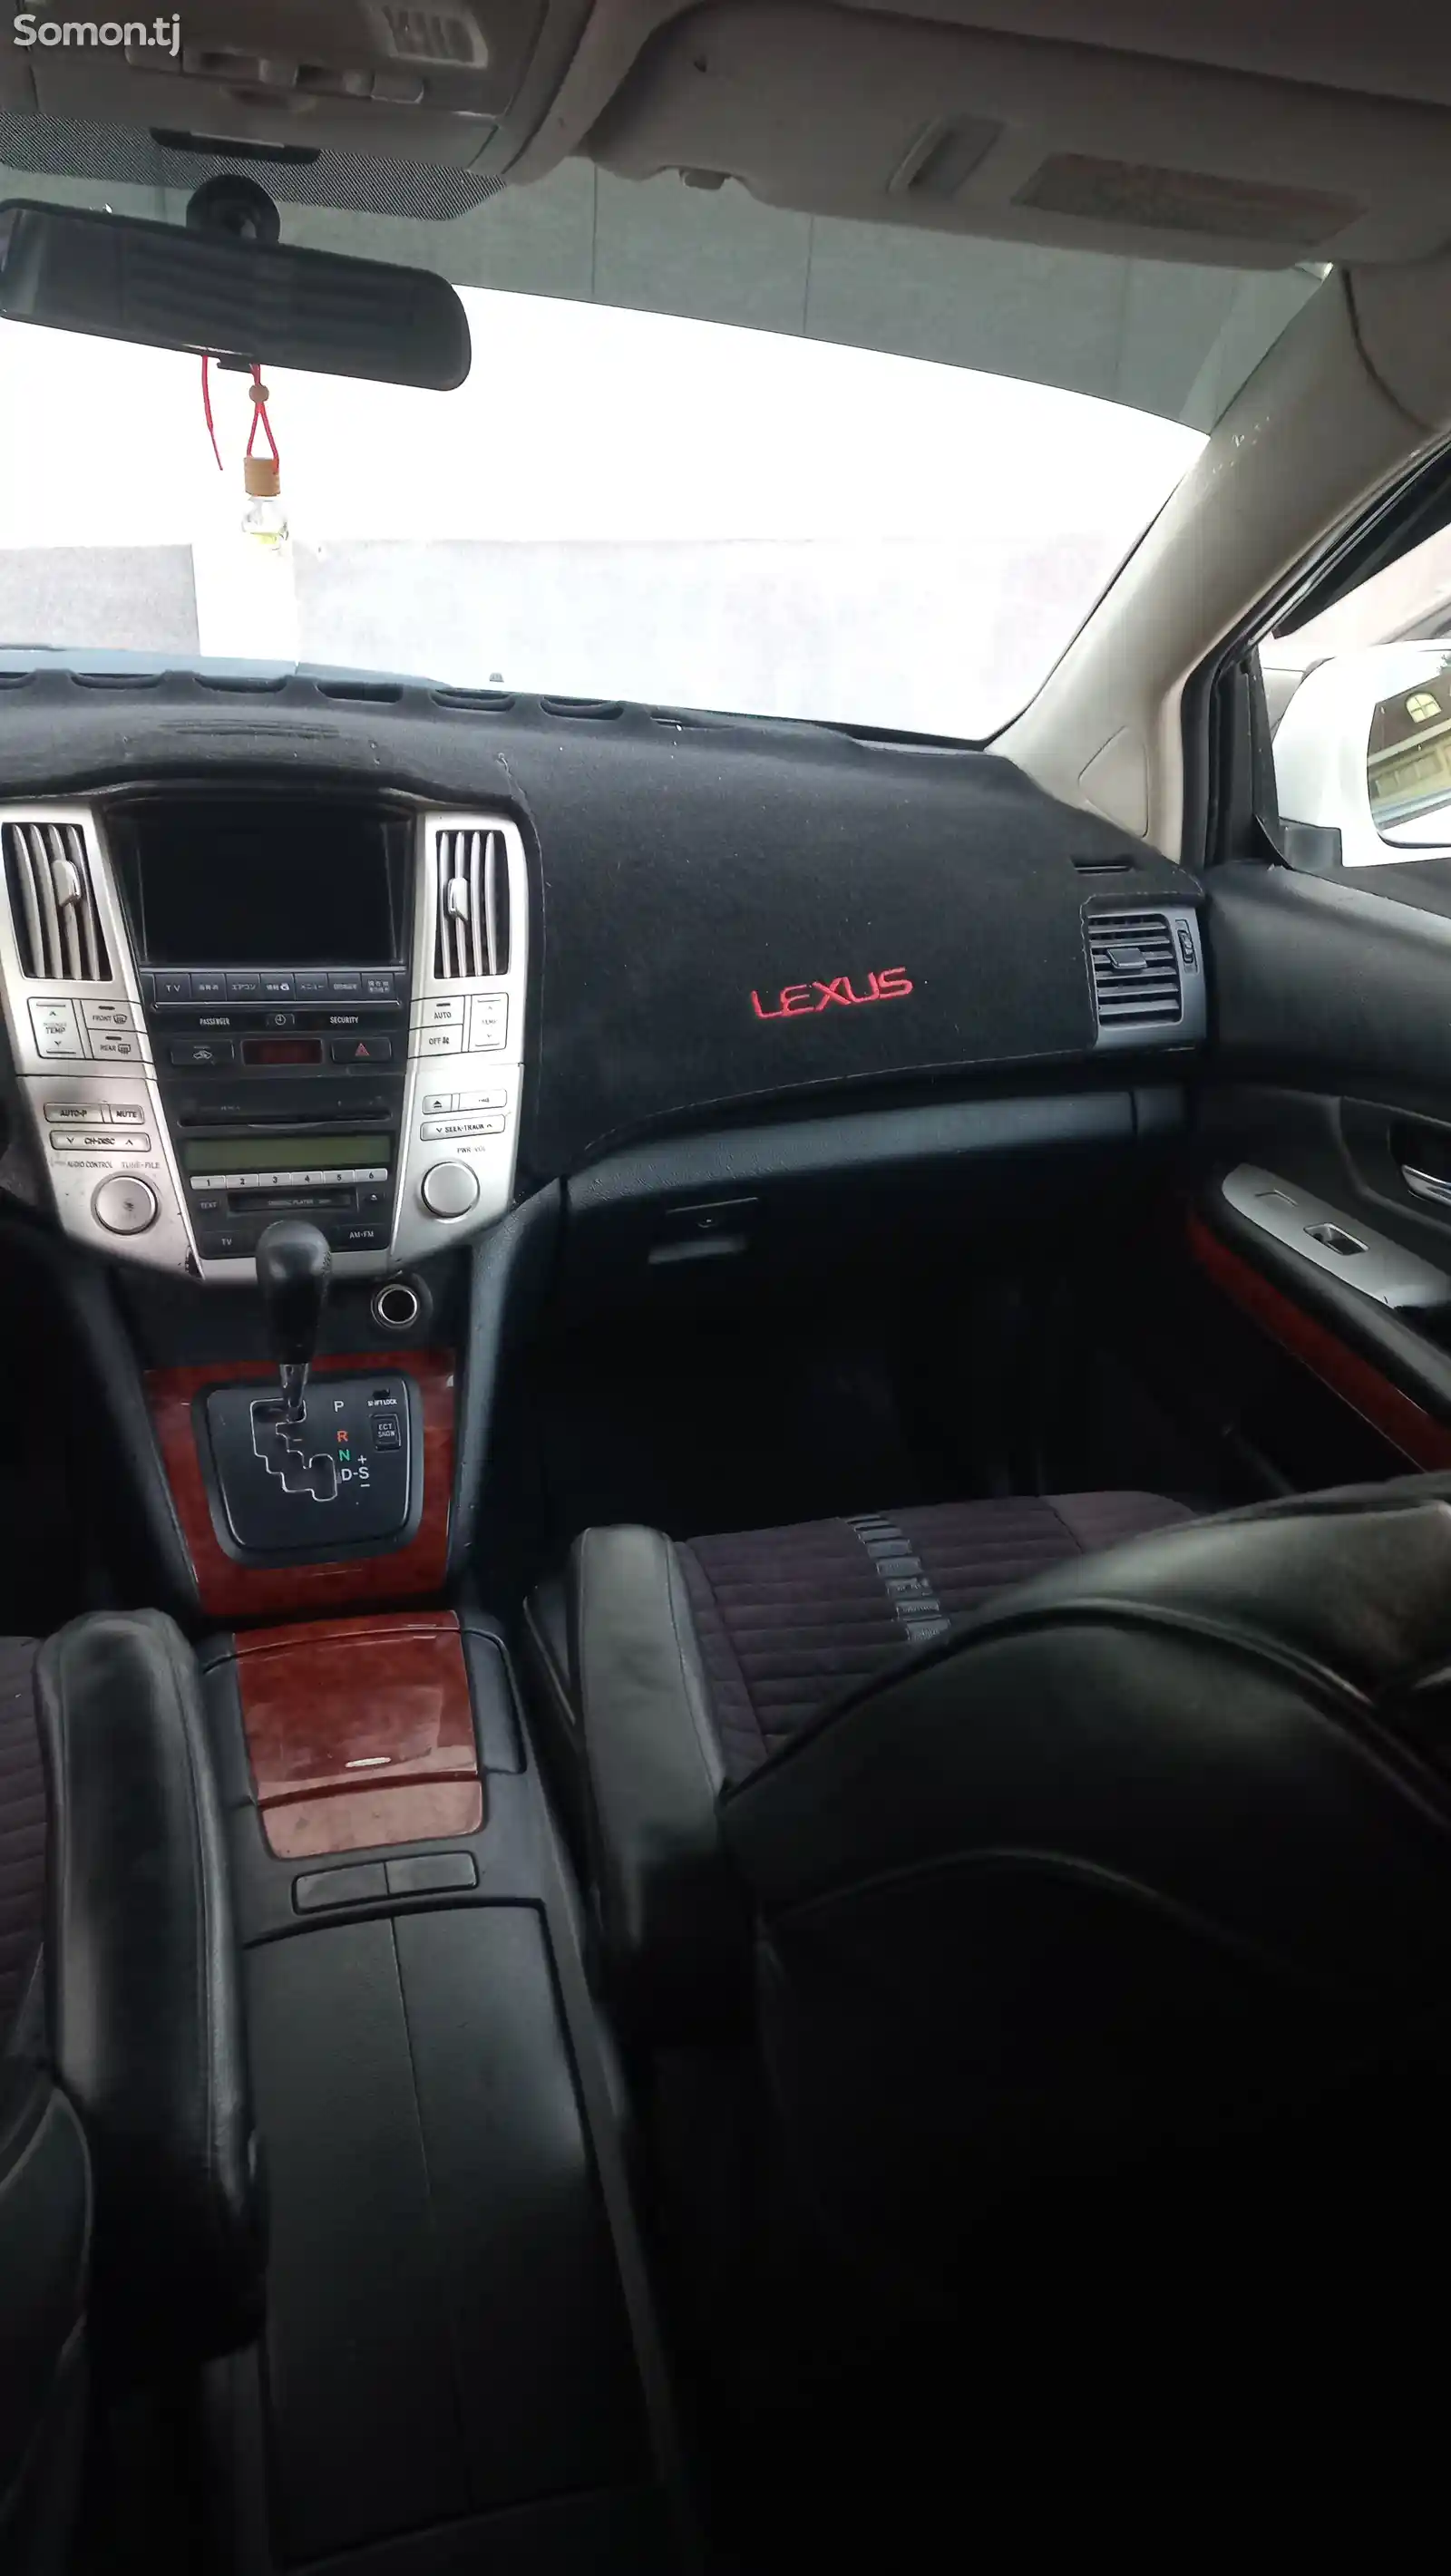 Lexus RX series, 2005-2